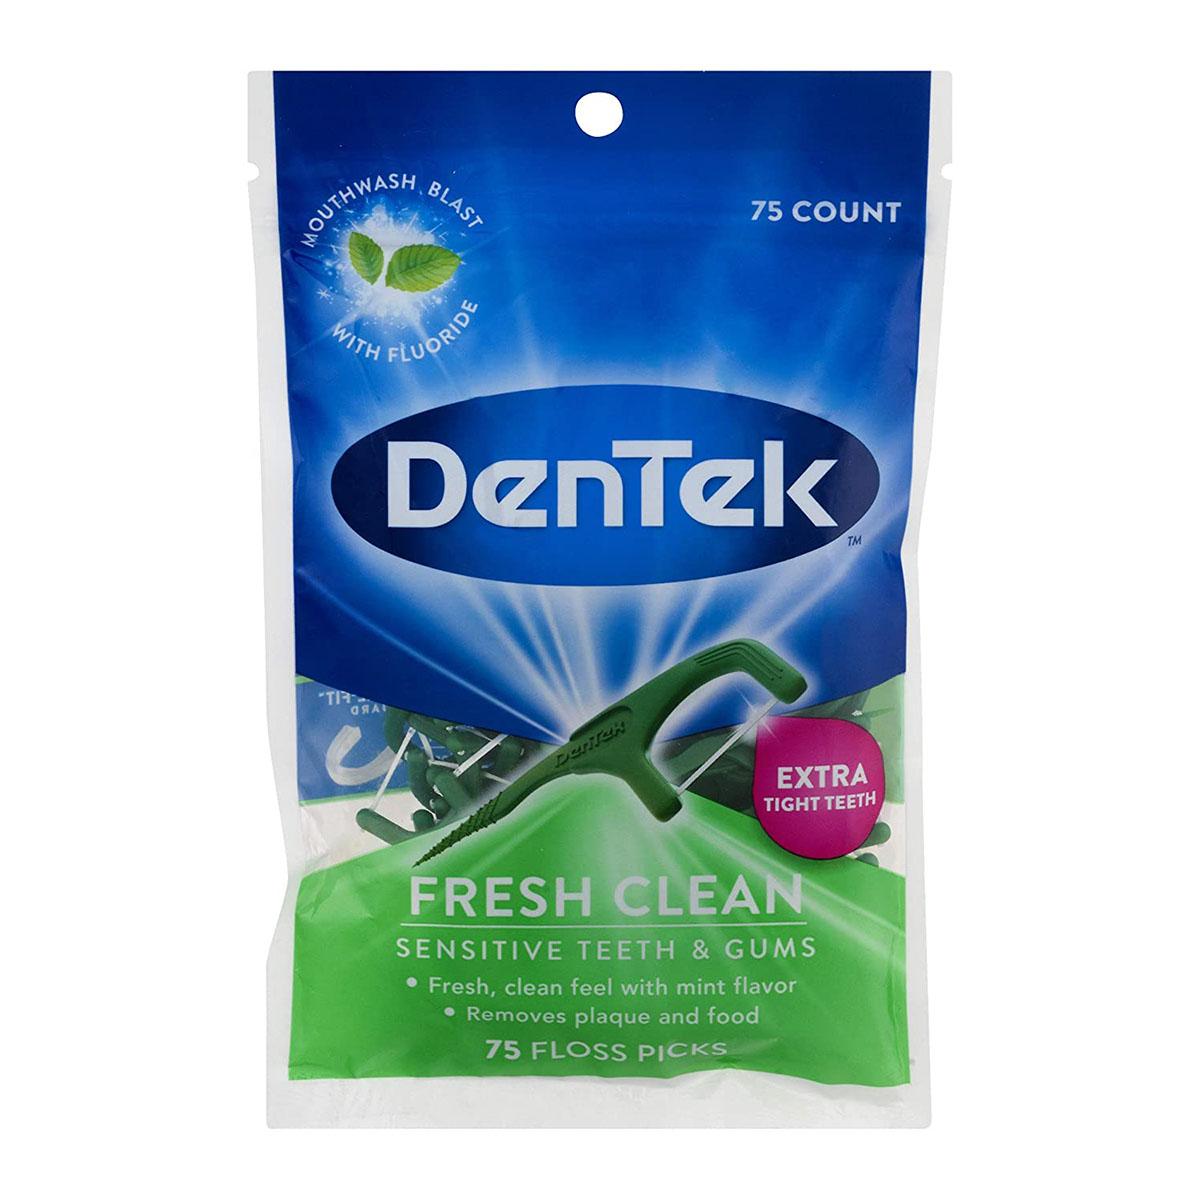 Dentek Products Buy 1 Get 1 Free